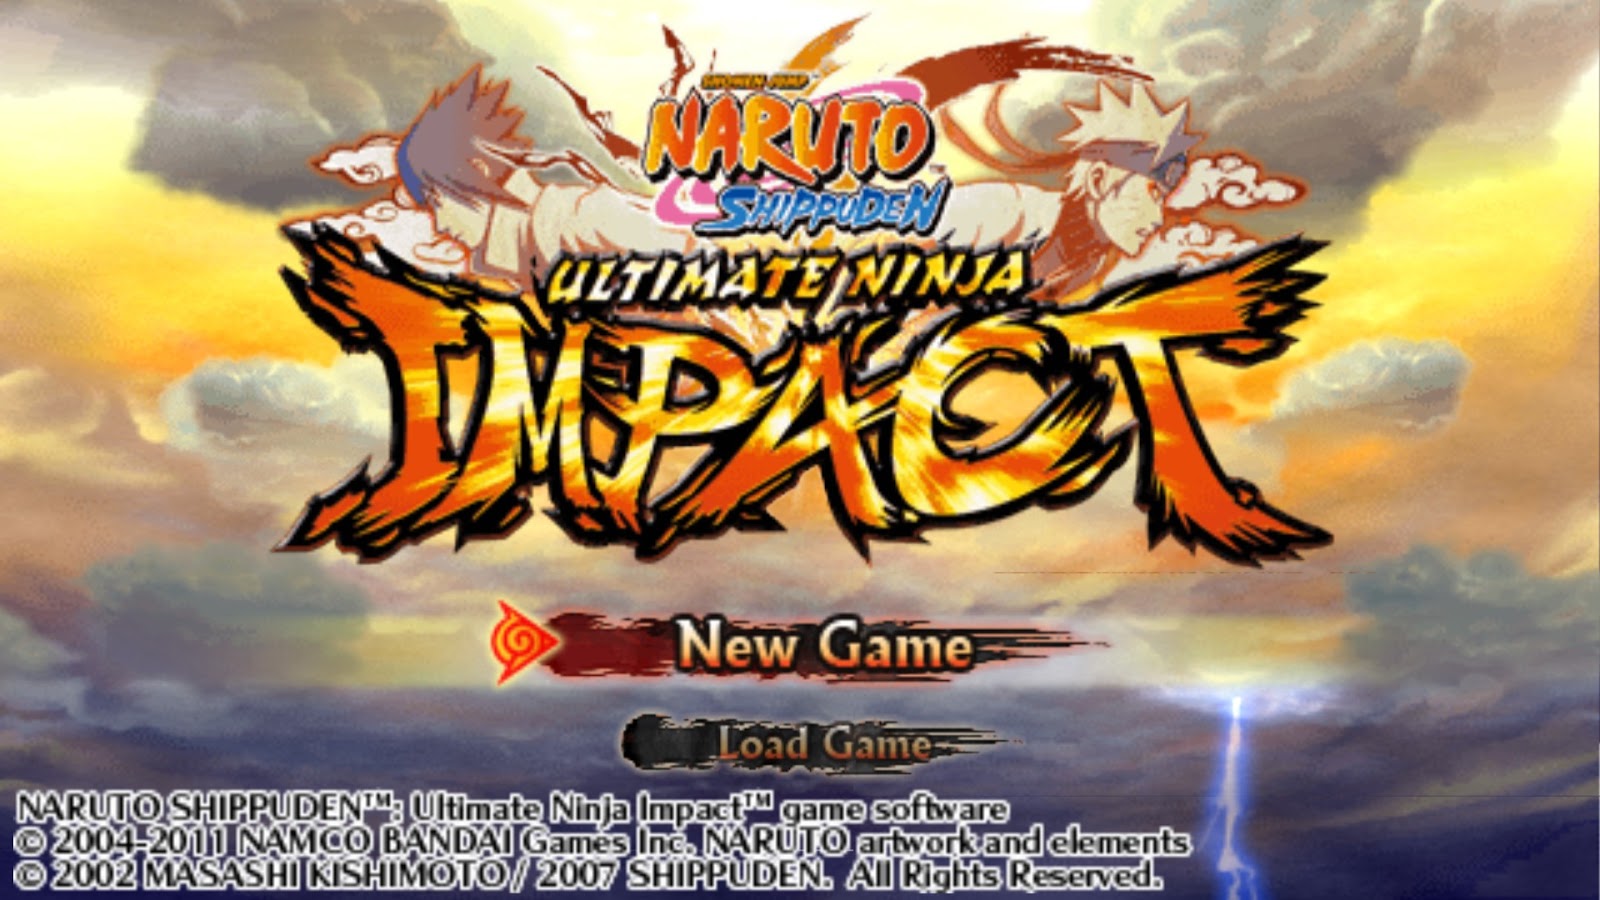 download naruto ultimate ninja impact iso file